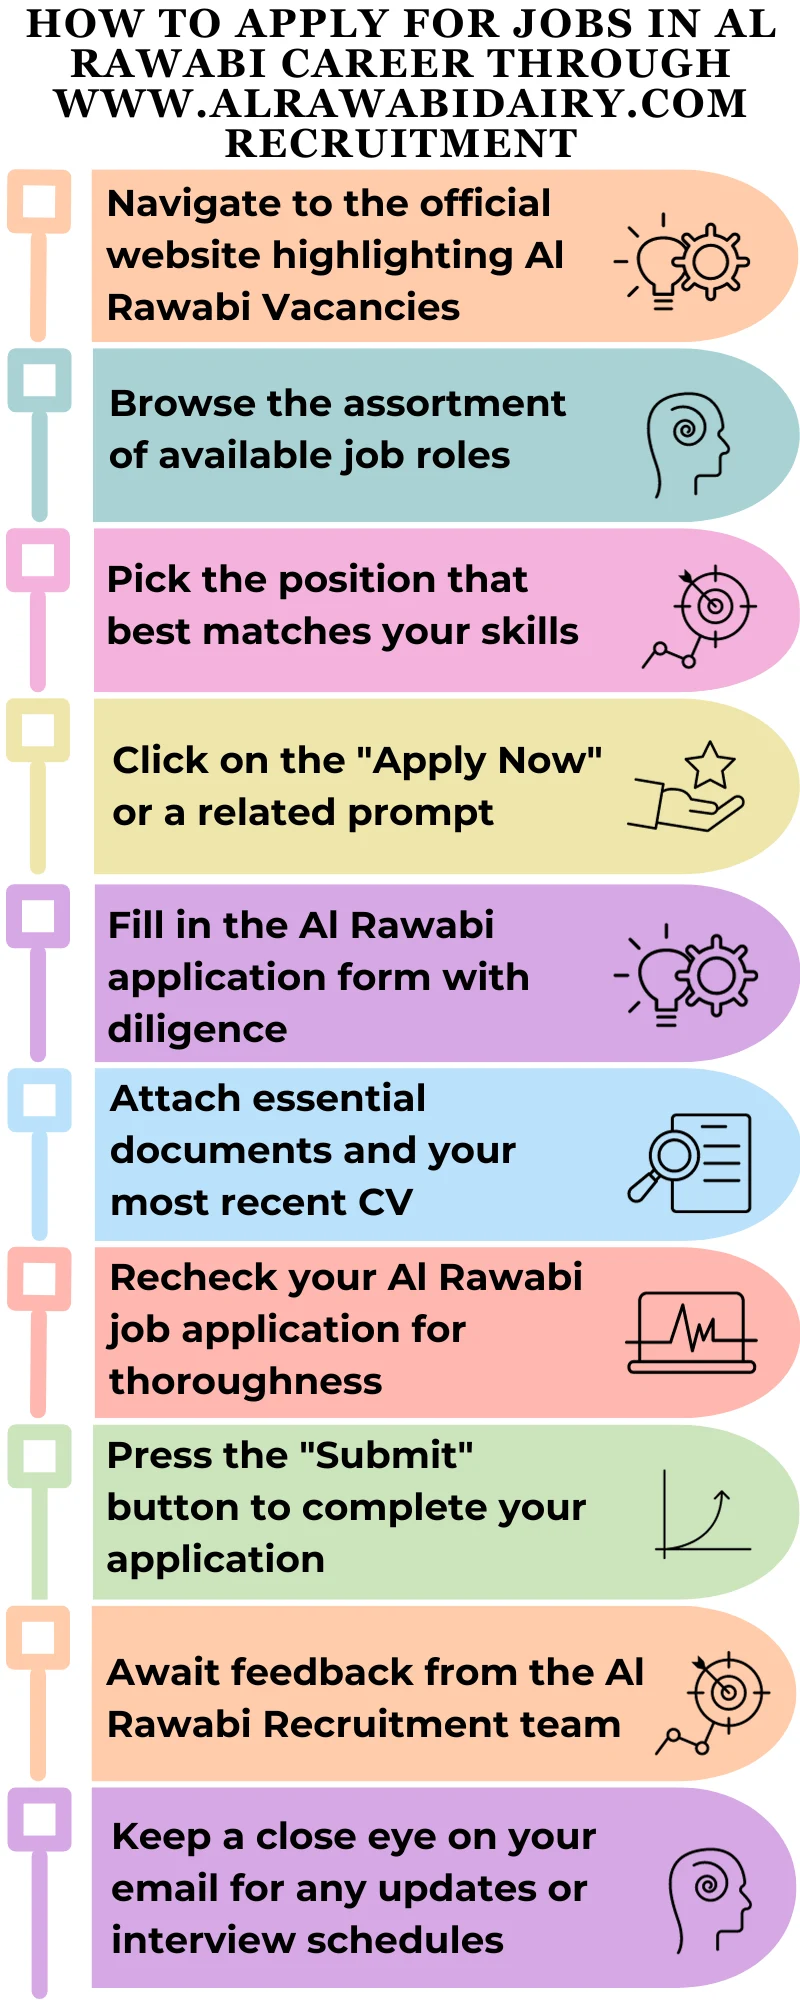 How to Apply for Jobs in Al Rawabi Career through www.alrawabidairy.com recruitment?